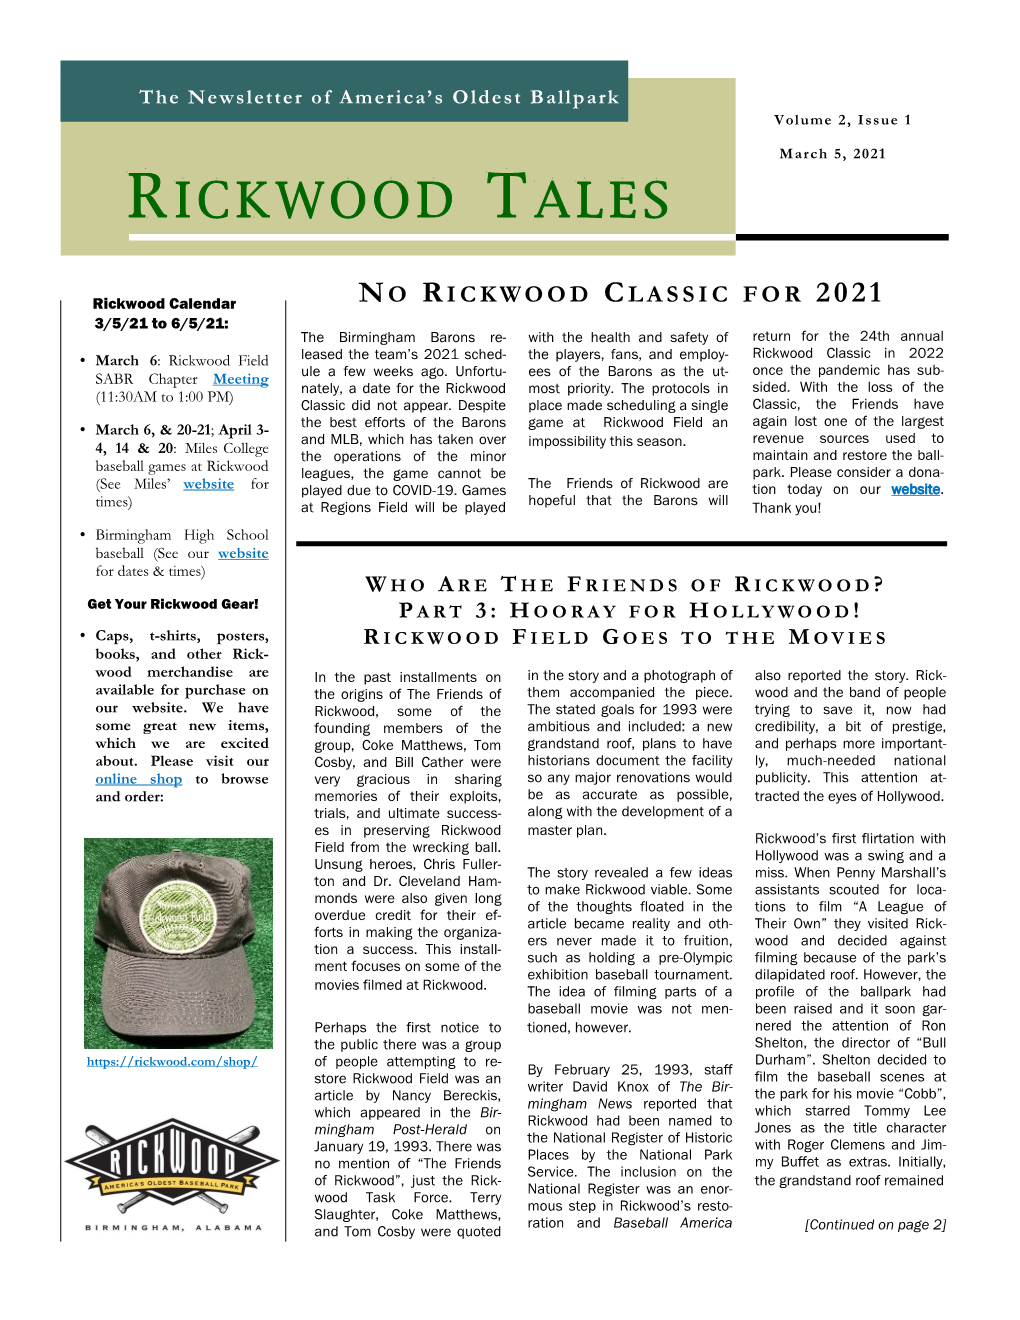 Rickwood Tales